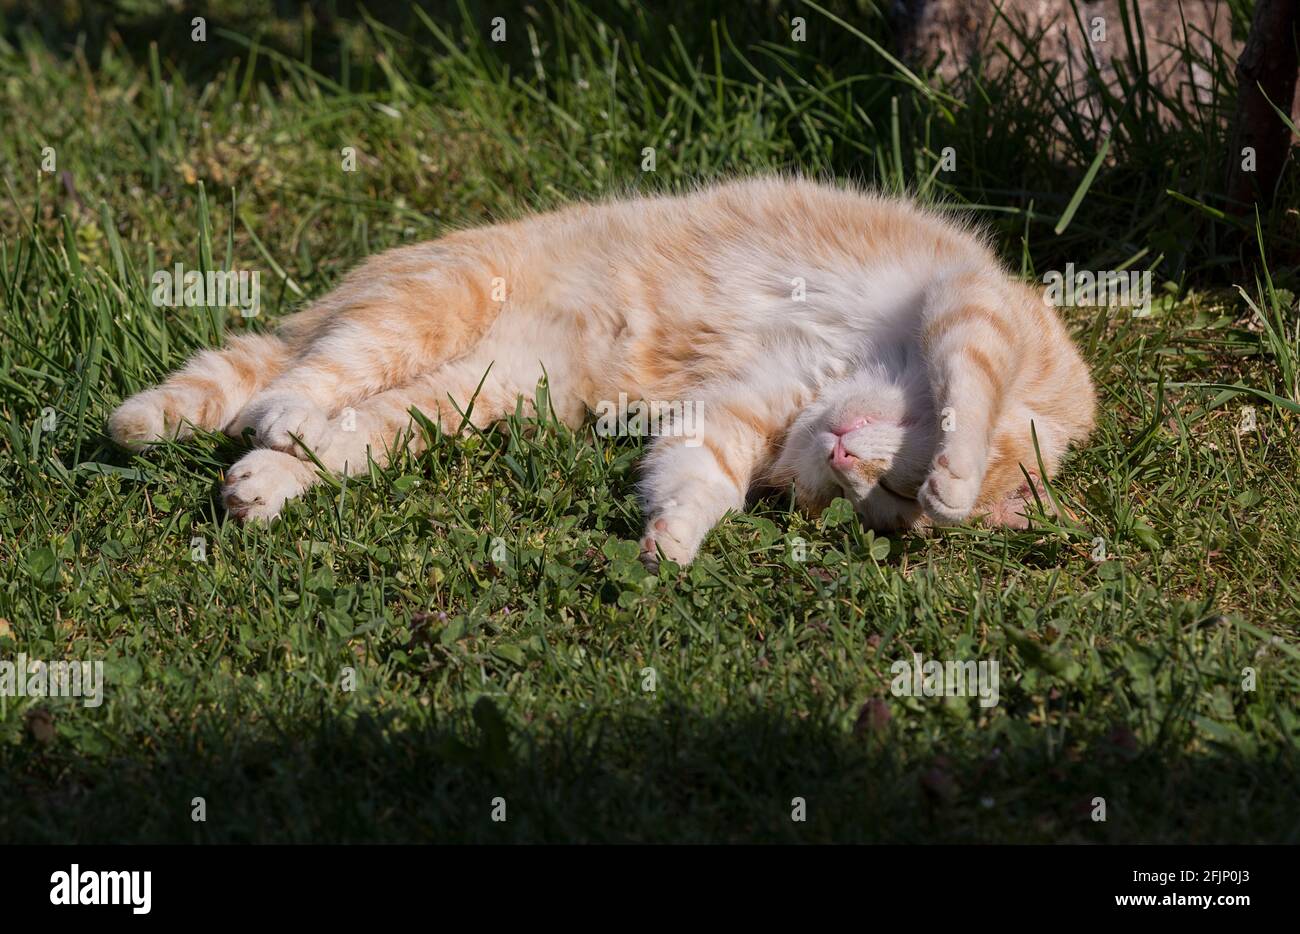 Sleeping cat gato durmiendo Stock Photo